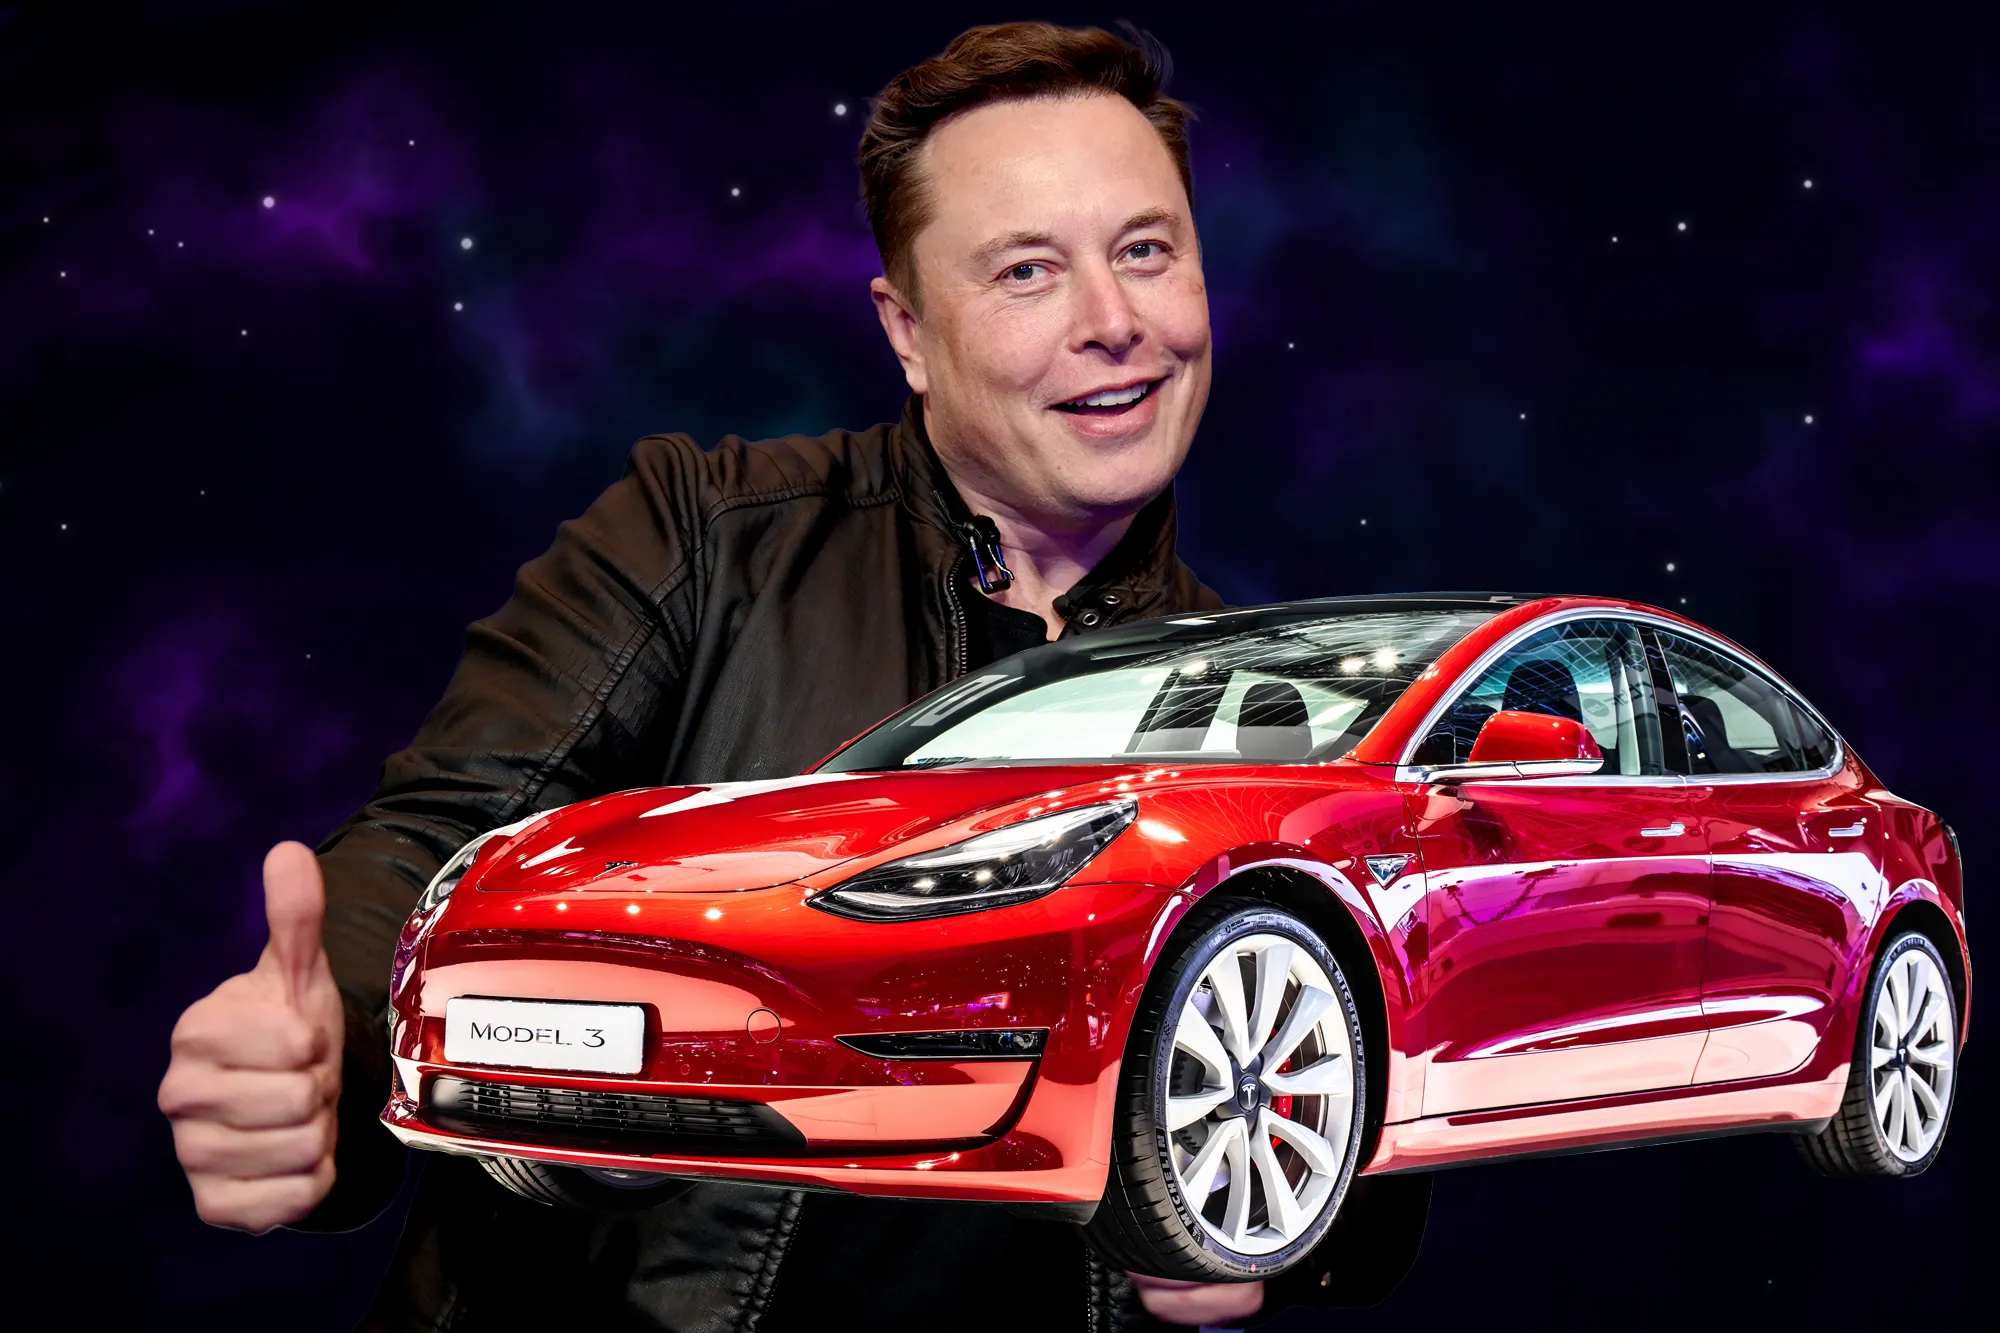 Elon Musk: Blow his own trumpet